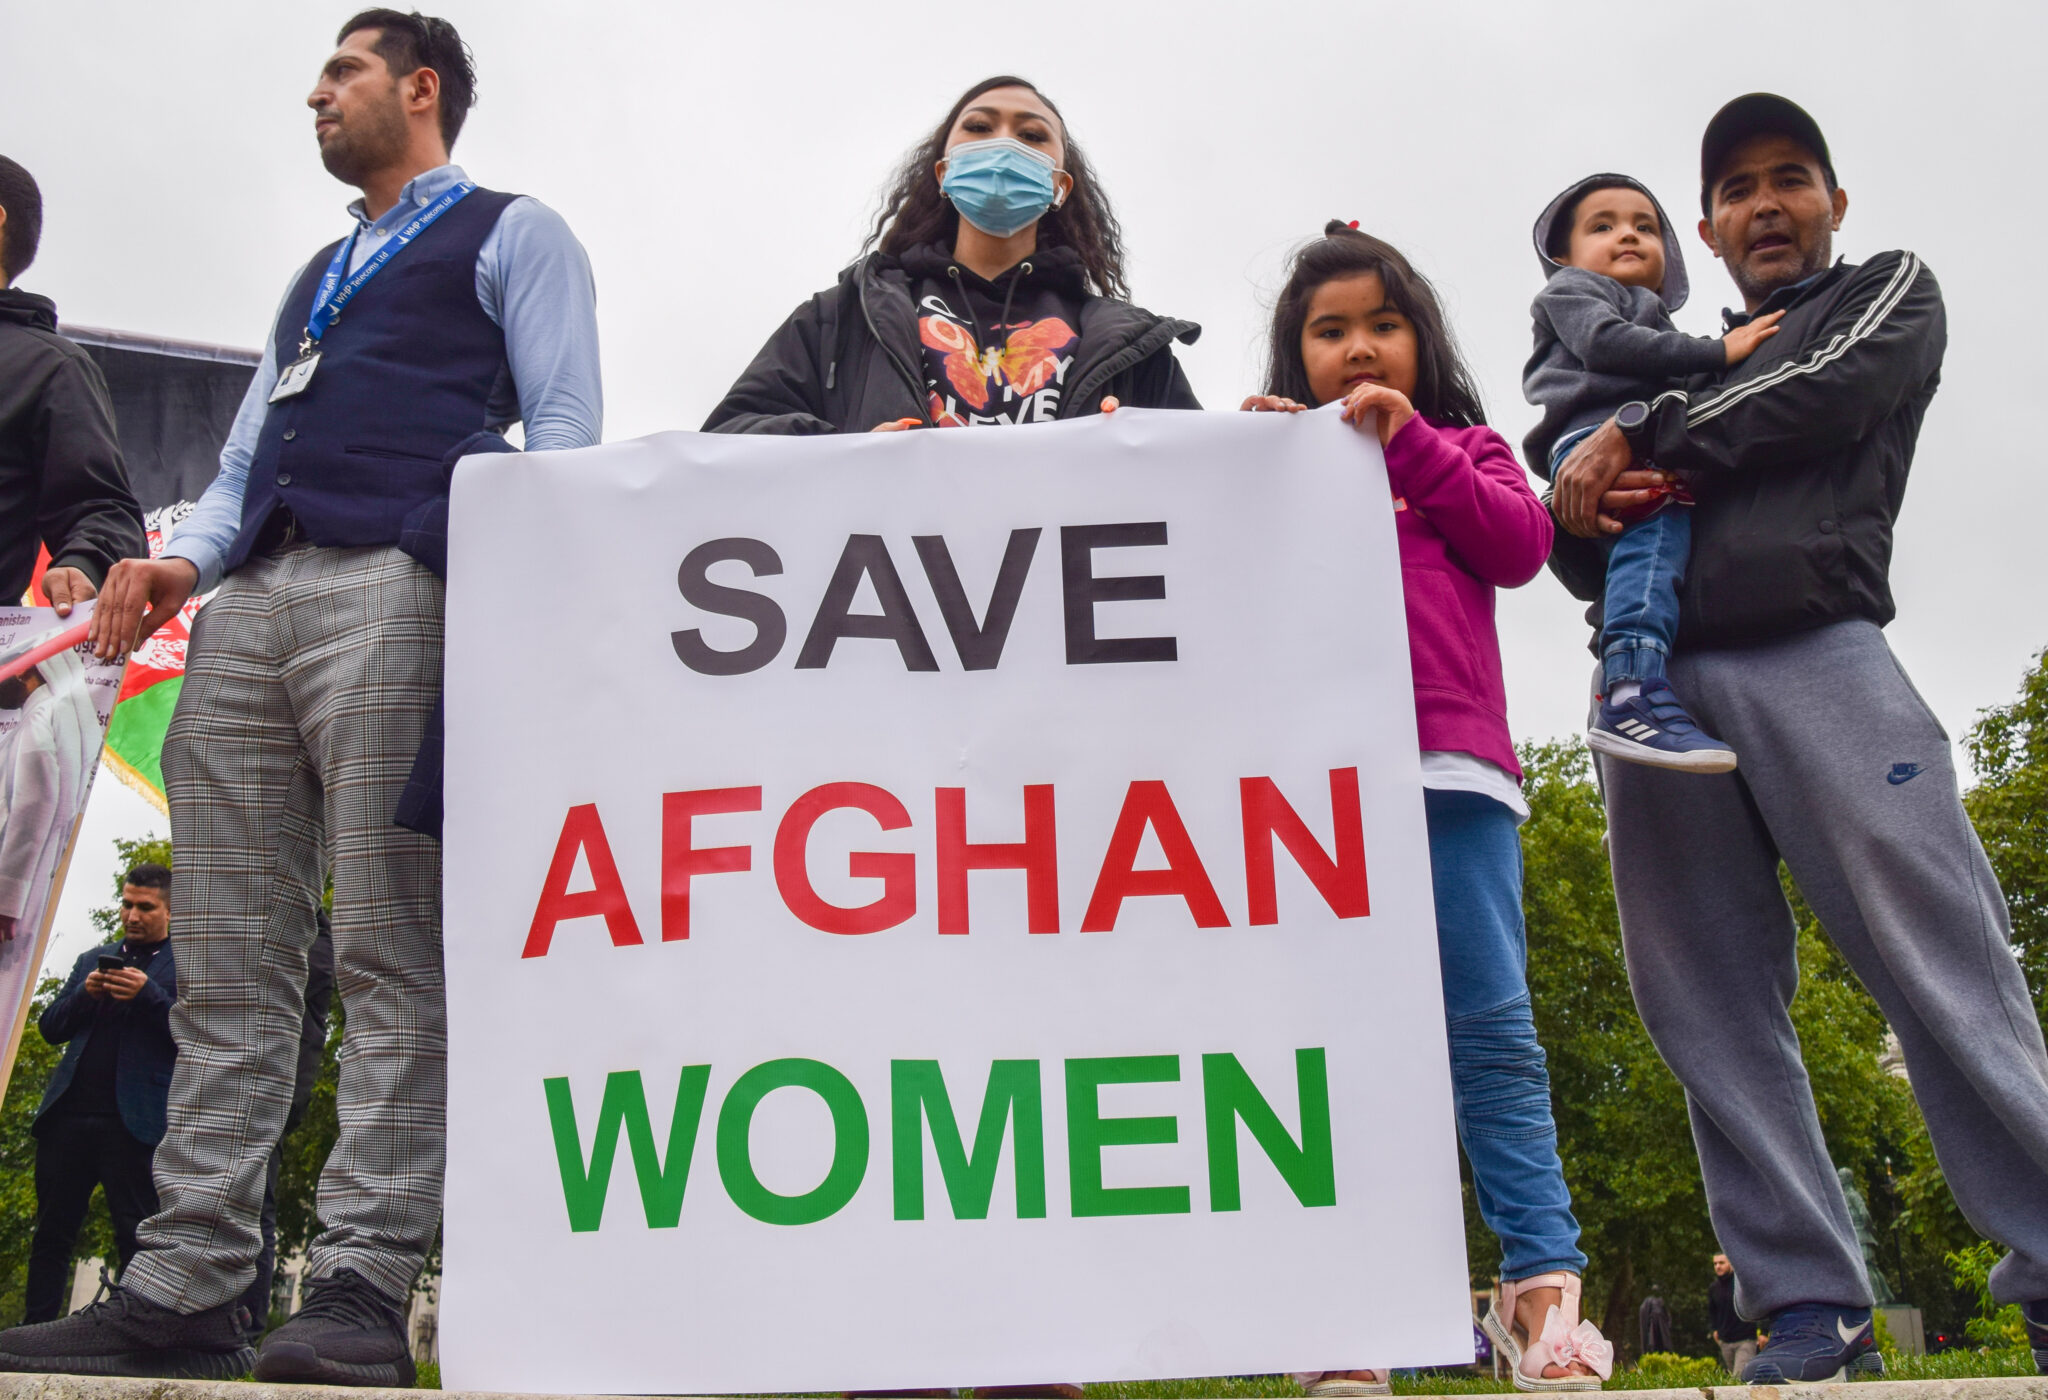 Акция в поддержку женщин Афганистана в Лондоне. Фото  Vuk Valcic/SOPA Images via ZUMA Press Wire/Scanpix/Leta